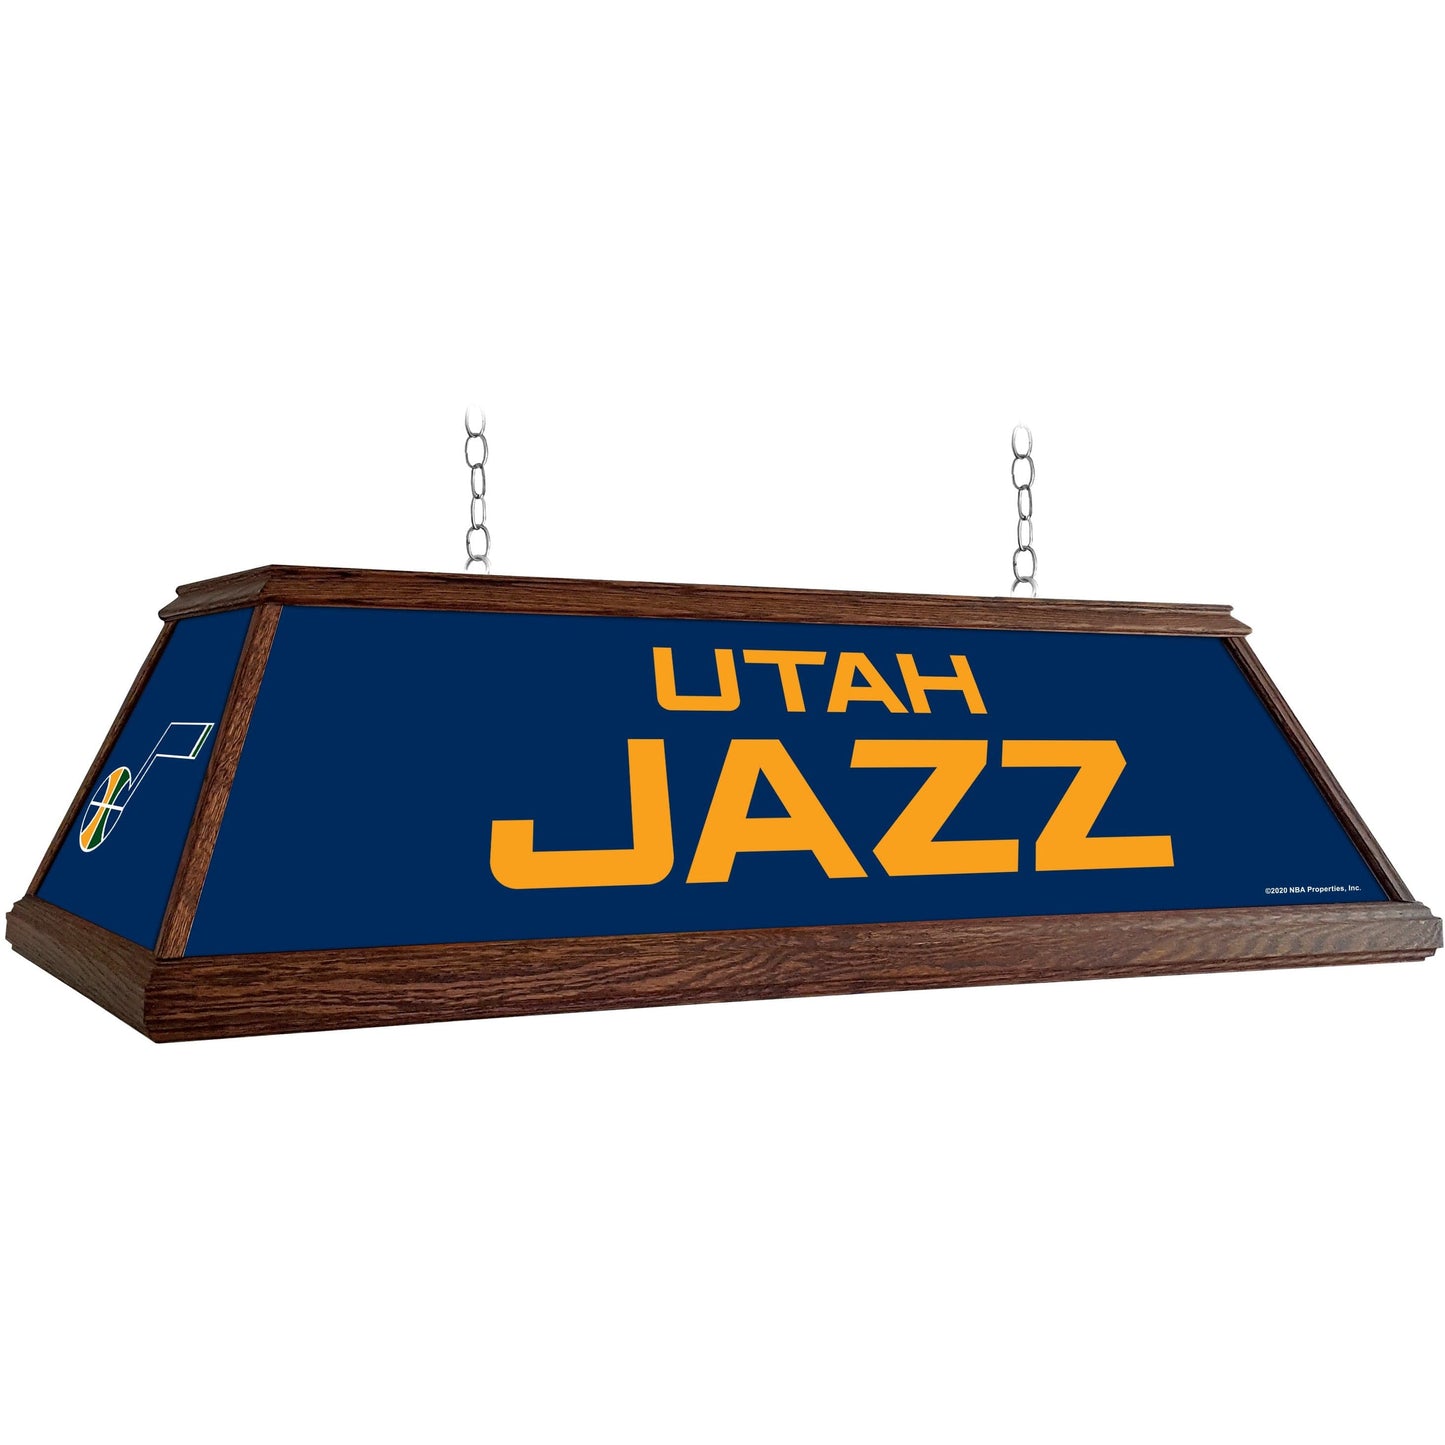 Utah Jazz: Premium Wood Pool Table Light - The Fan-Brand